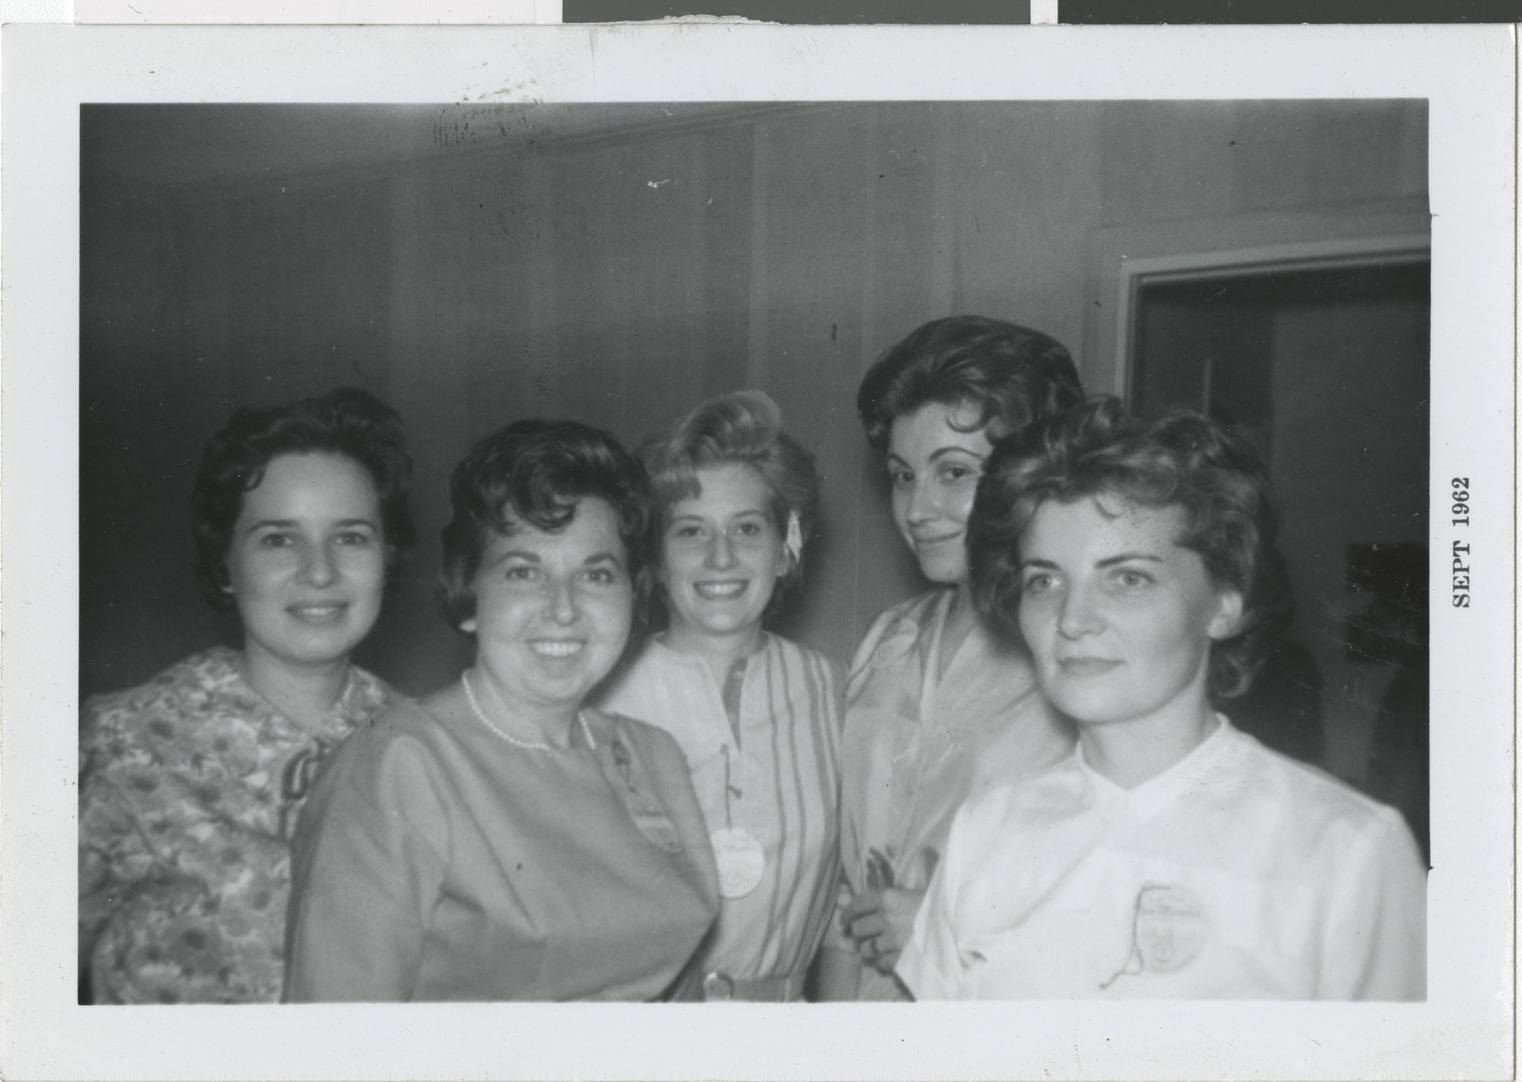 Photograph of new B'nai B'rith members Irma Sheon, Pearl Feigenbaum, Toby Artman, Joyce Odesky, and Ruth Speisen, September 1962